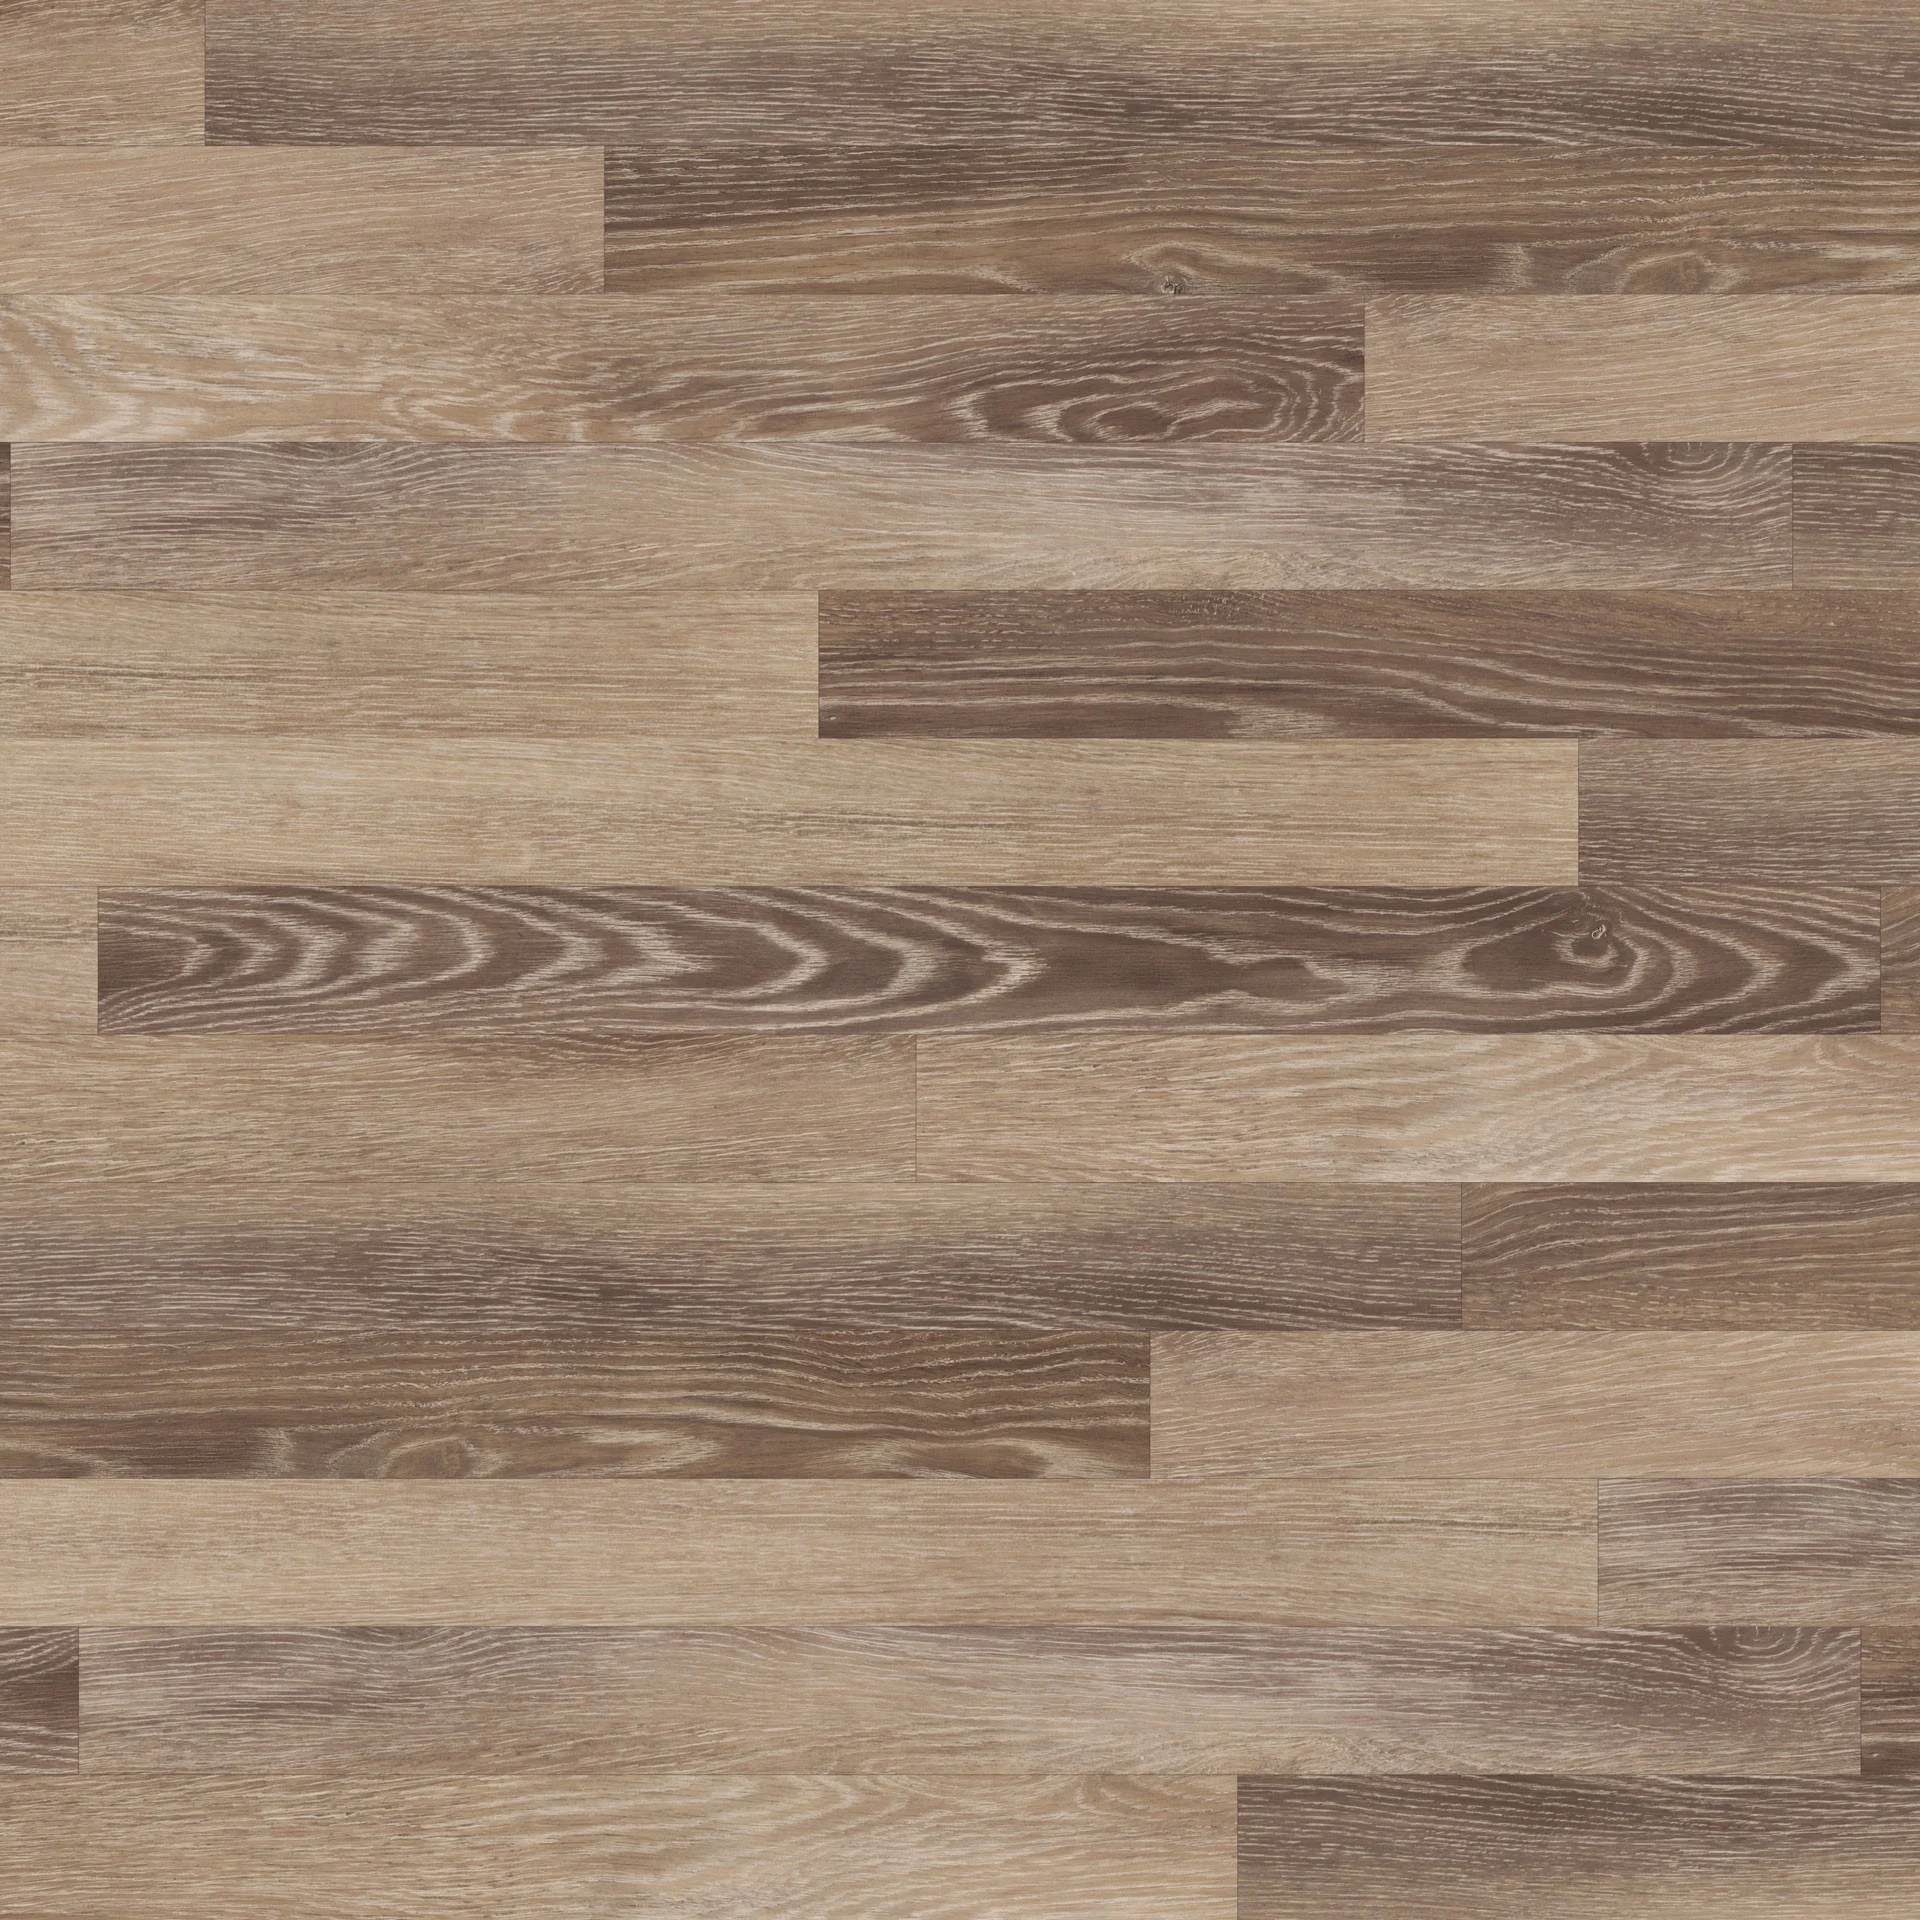 Karndean Da Vinci - Limed Jute Oak Safety Flooring